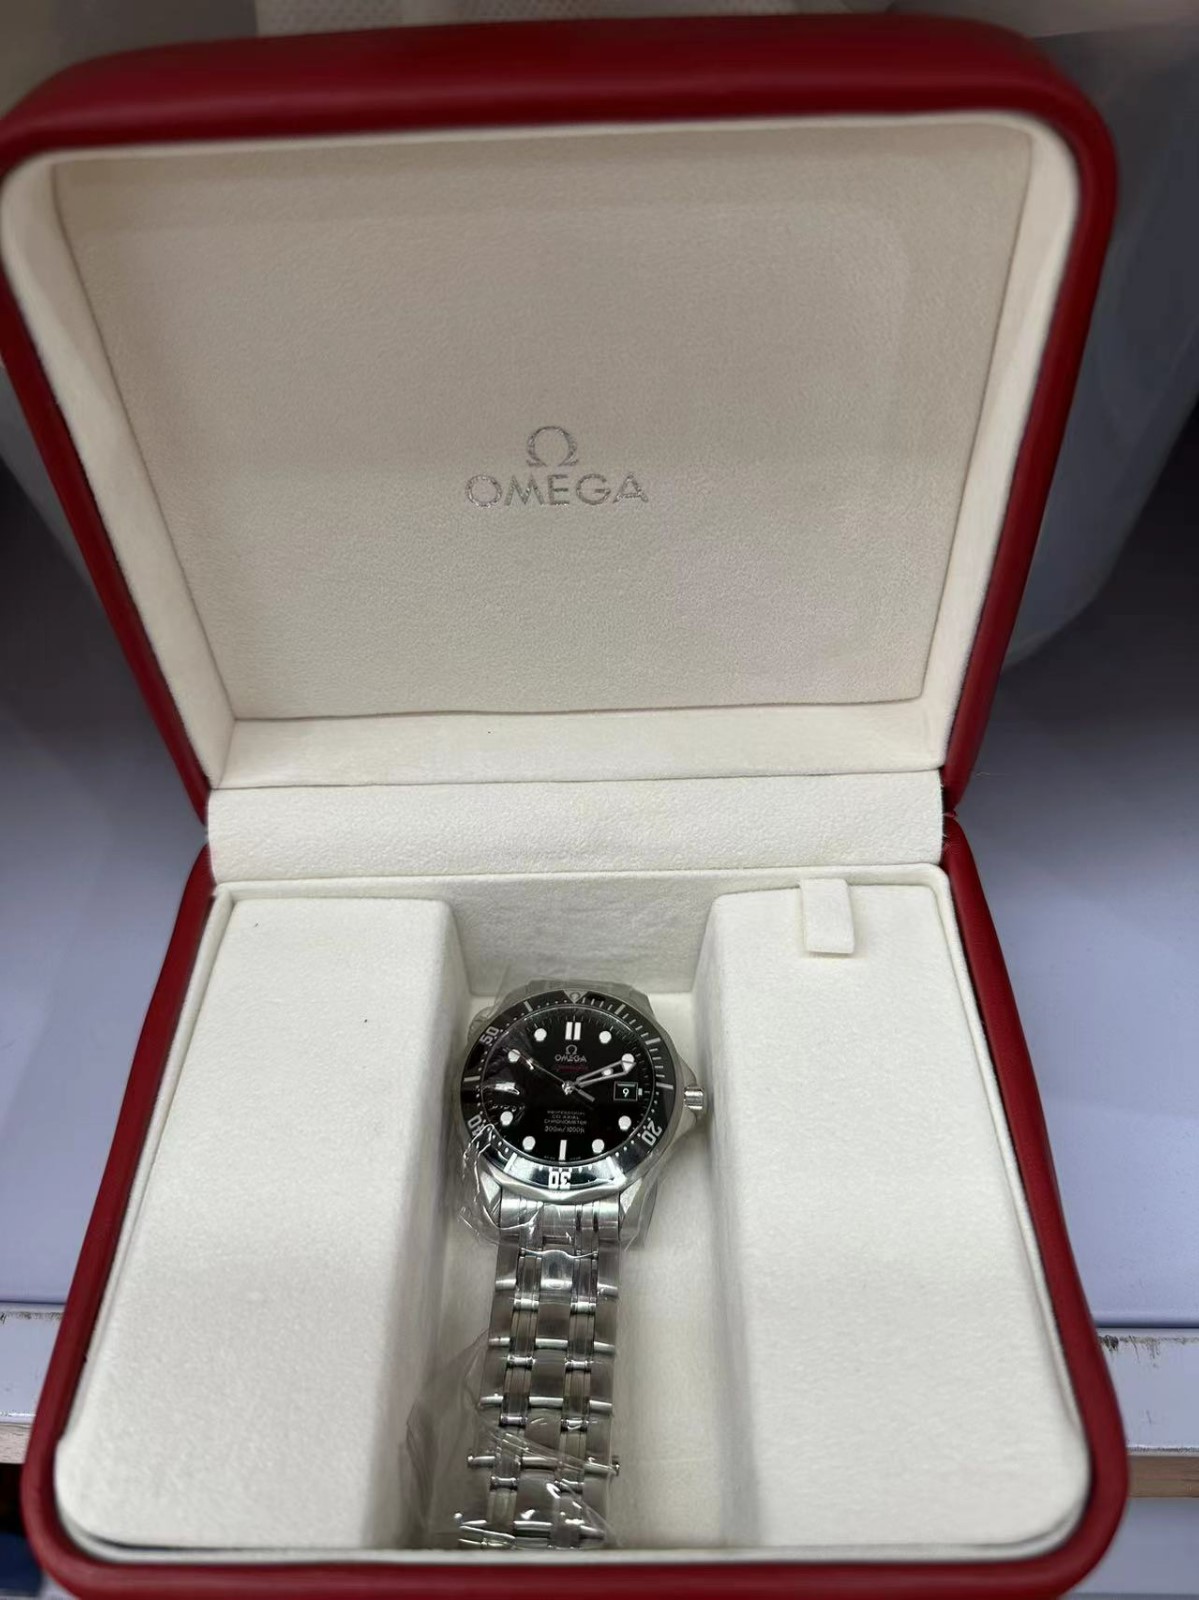 CHOPARD萧邦牌手表 CARTIER卡地亚手表等一批钟表类捆绑交易出售招标